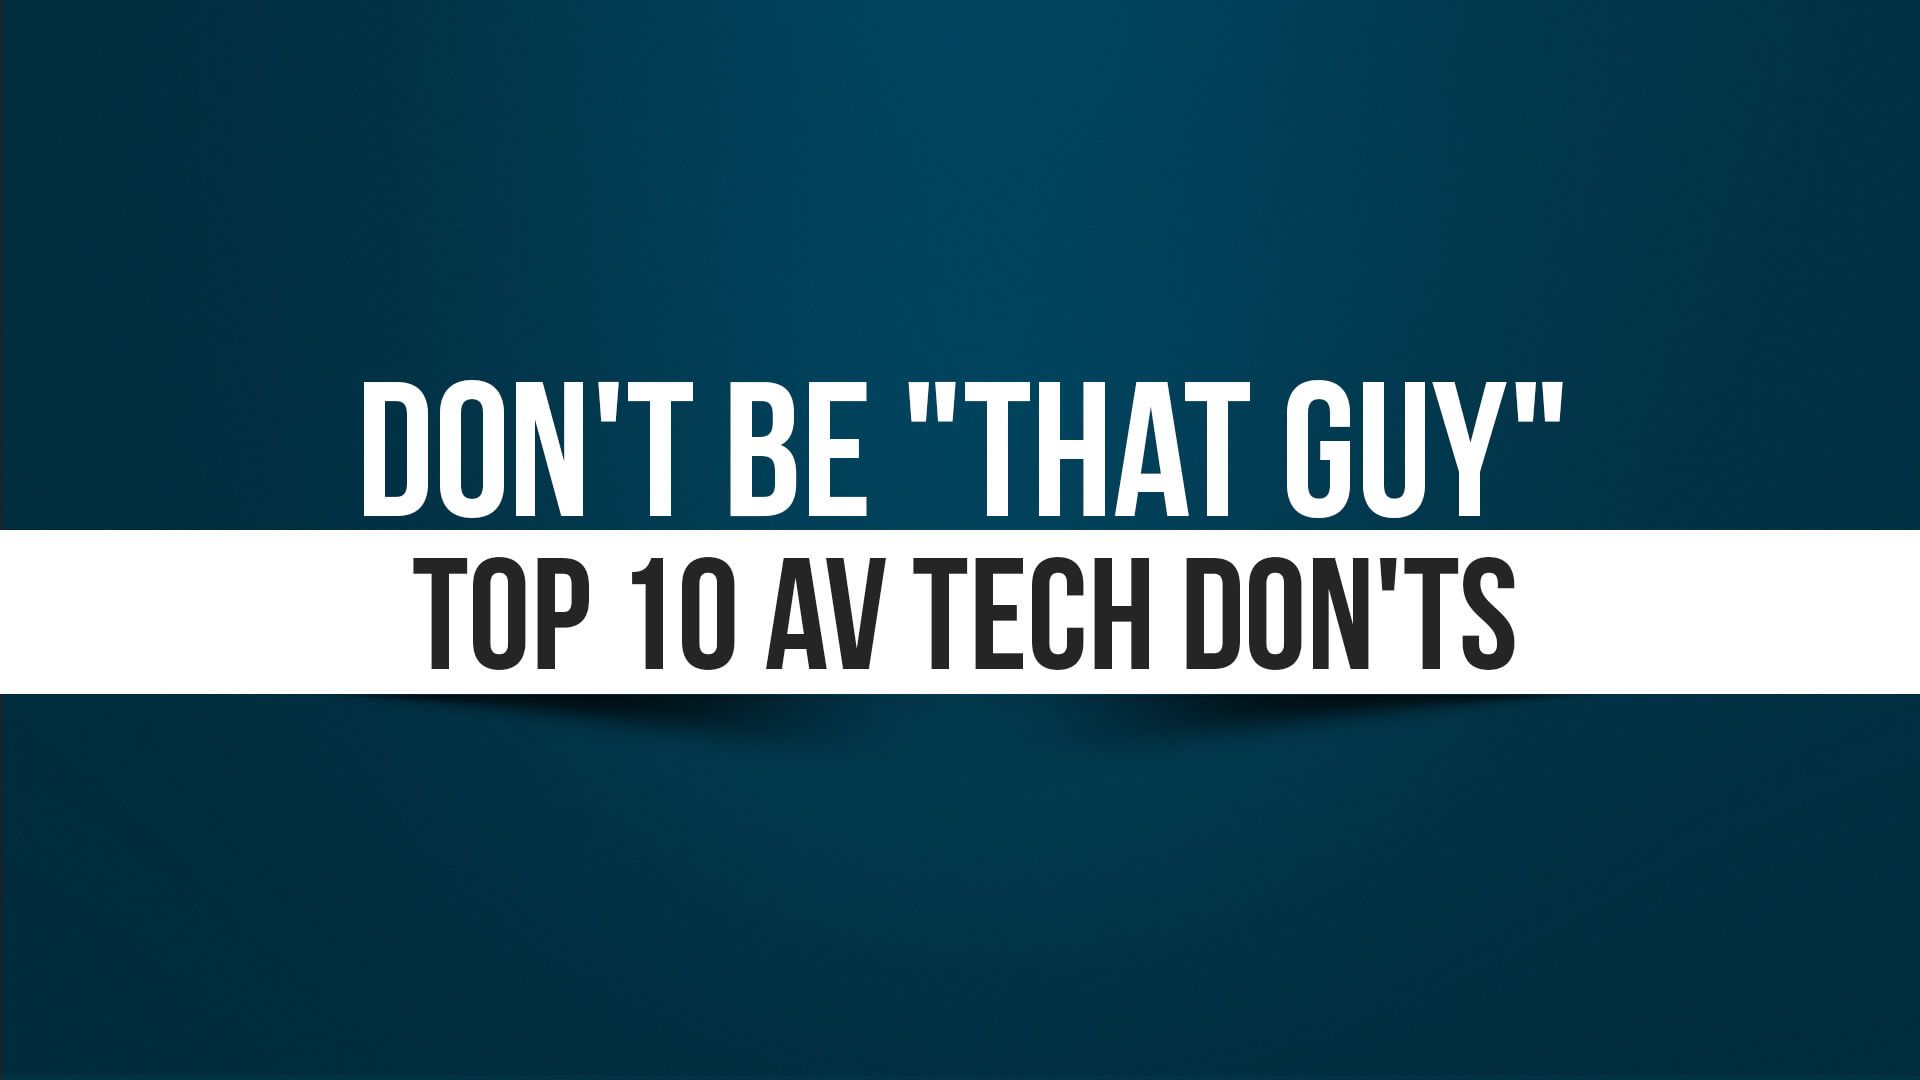 Don't be that guy top 10 av tech don'ts.